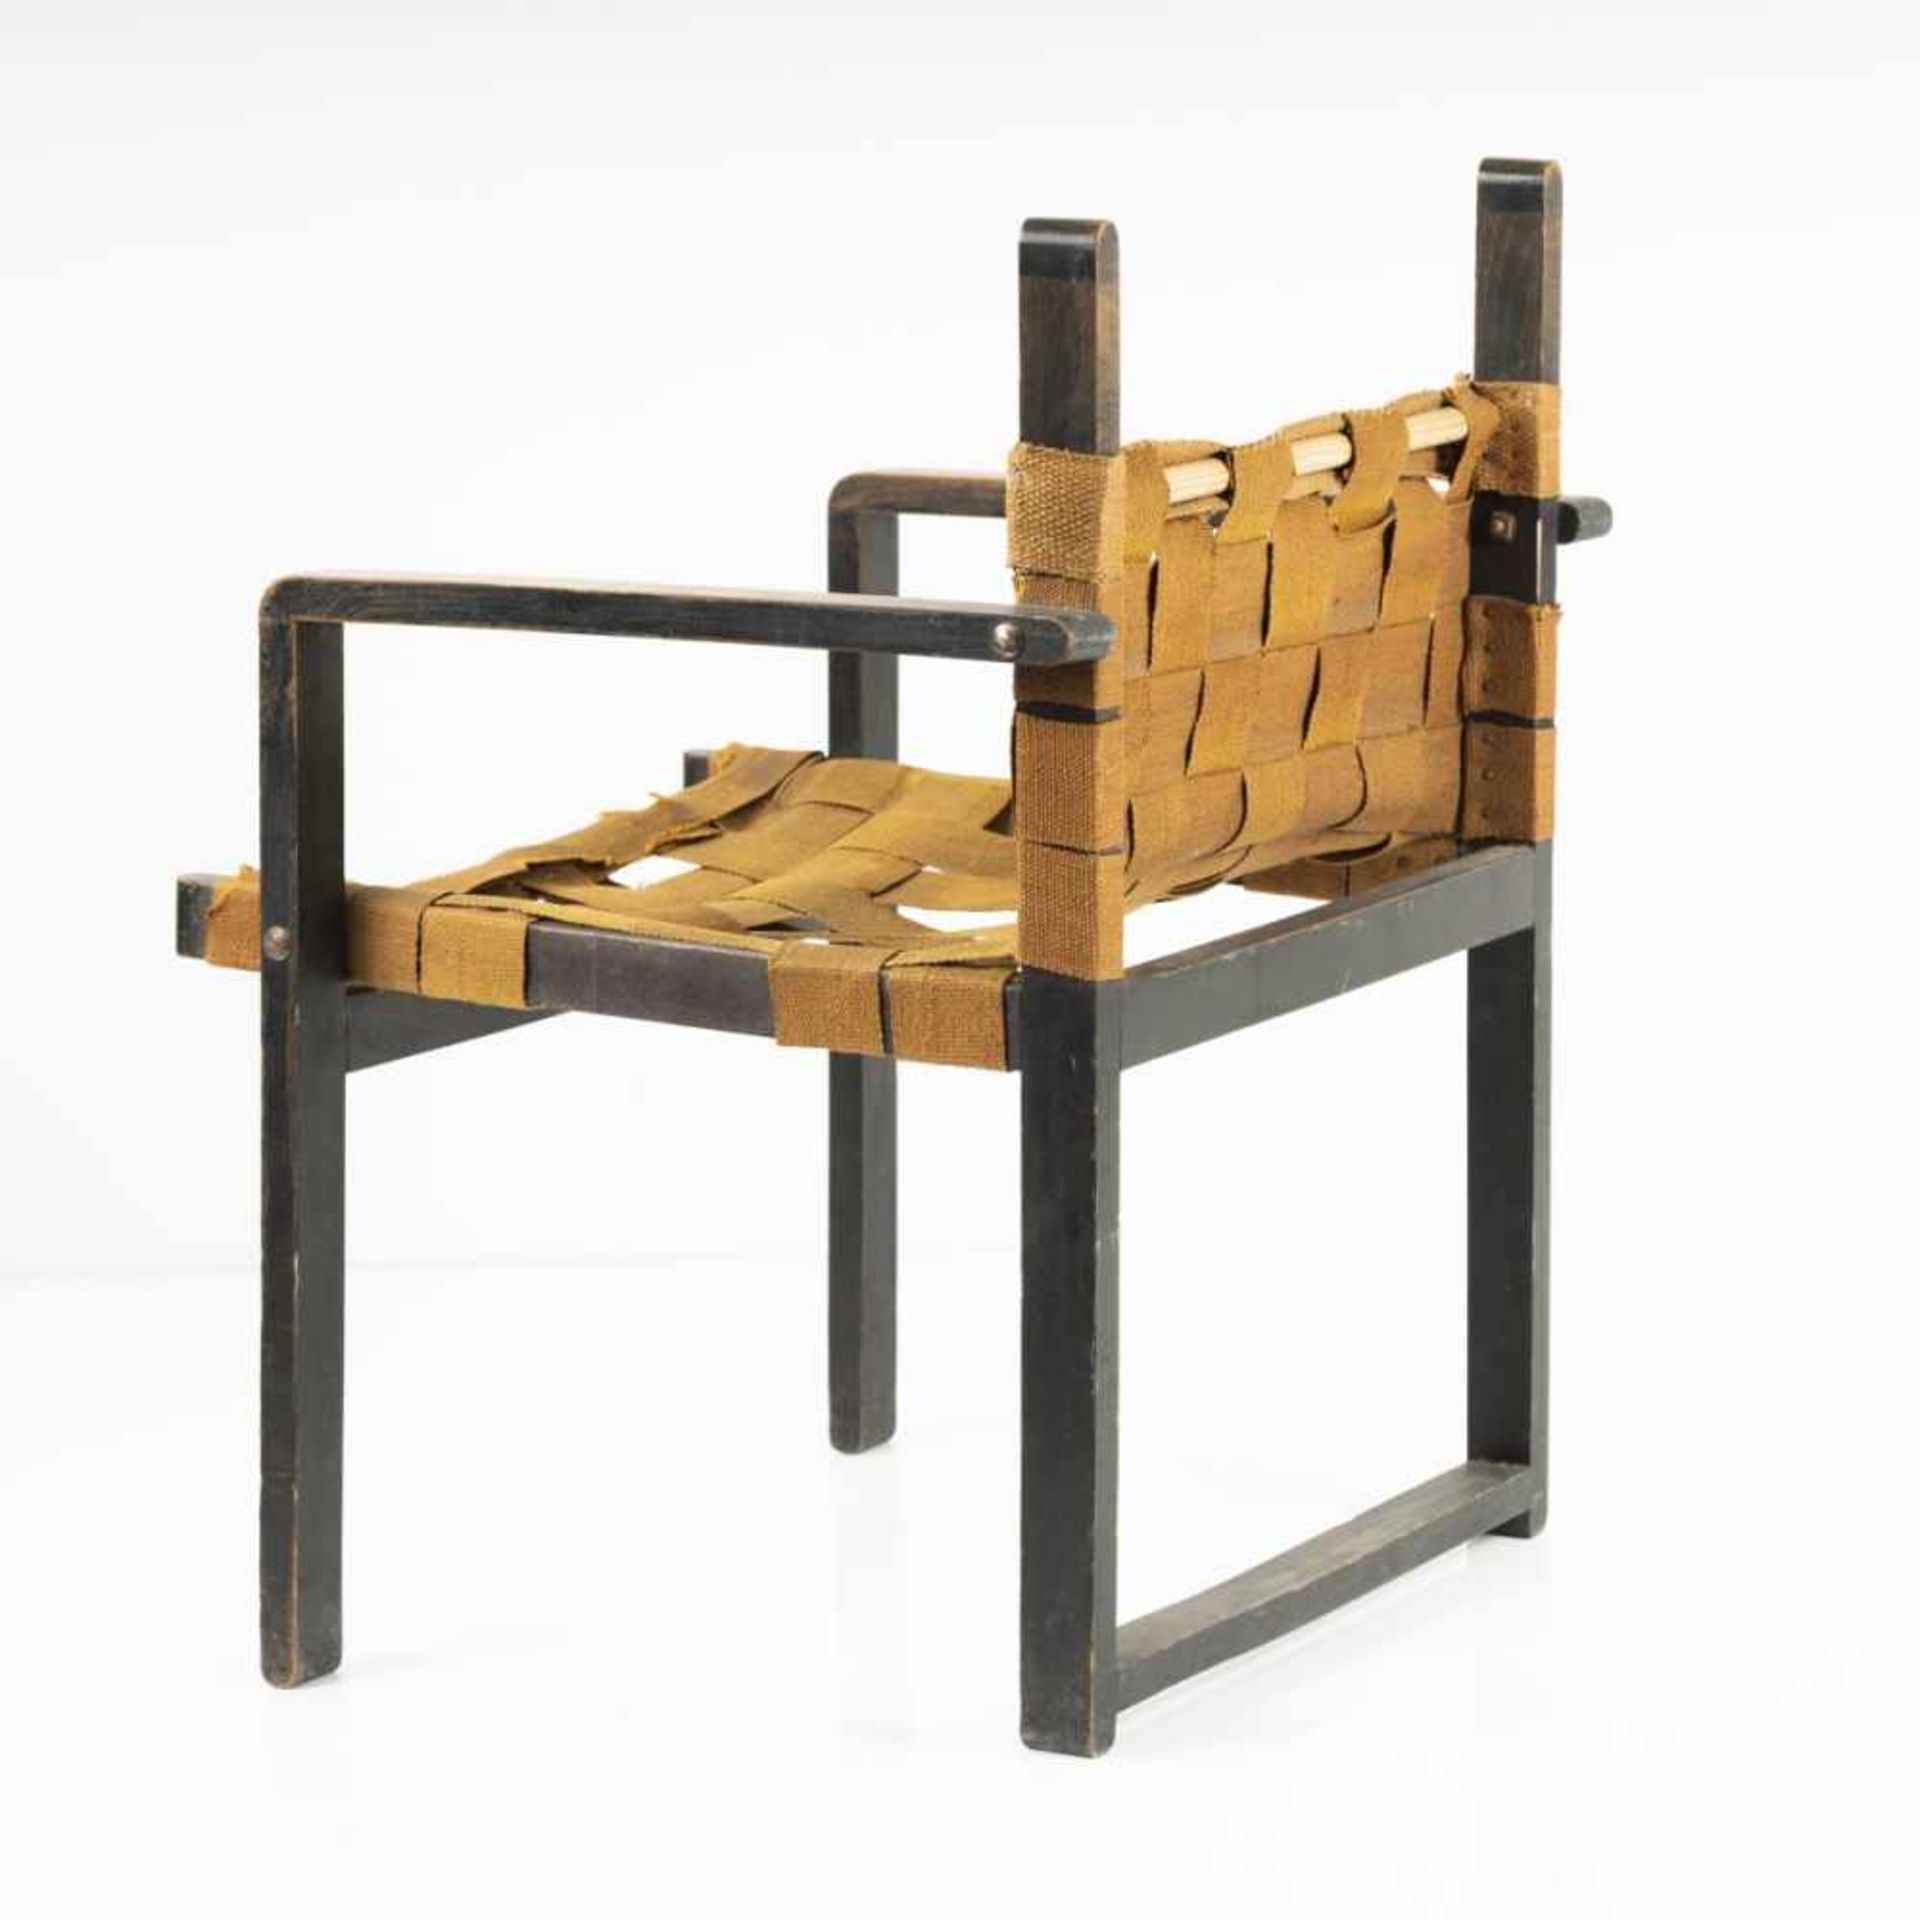 Bauhaus (surroundings of), Crate chair, c. 1925Crate chair, c. 1925H. 81 x 63.2 x 60 cm; wooden - Bild 9 aus 18